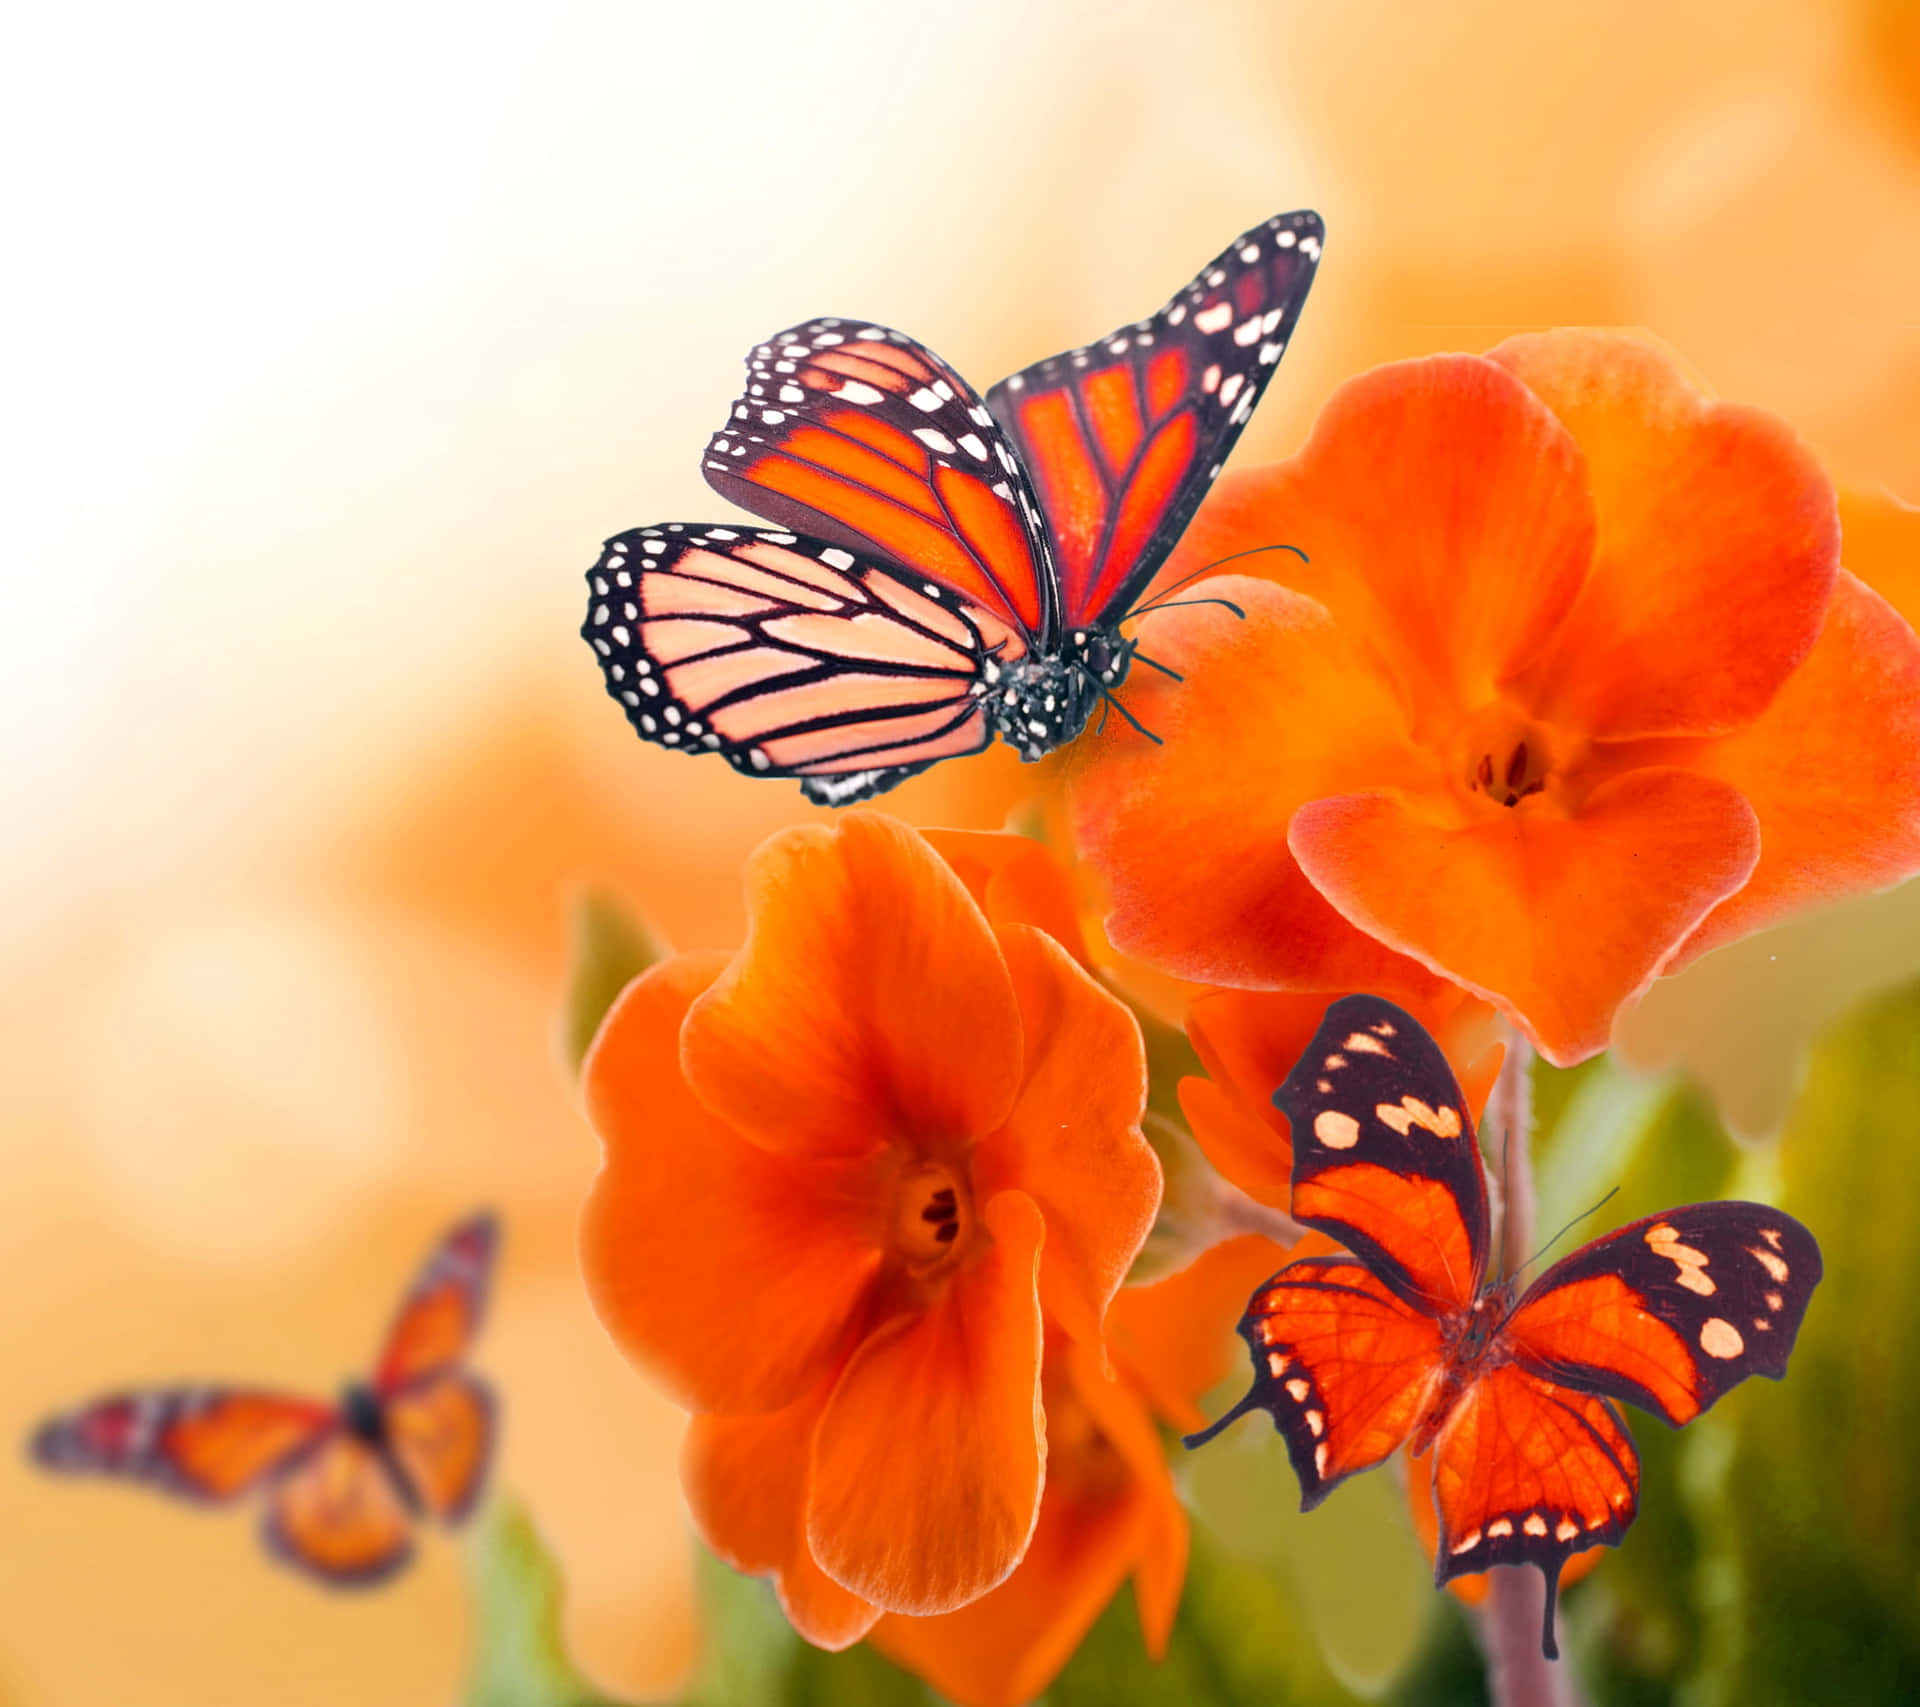 The beauty of butterflies fills a colorful garden.